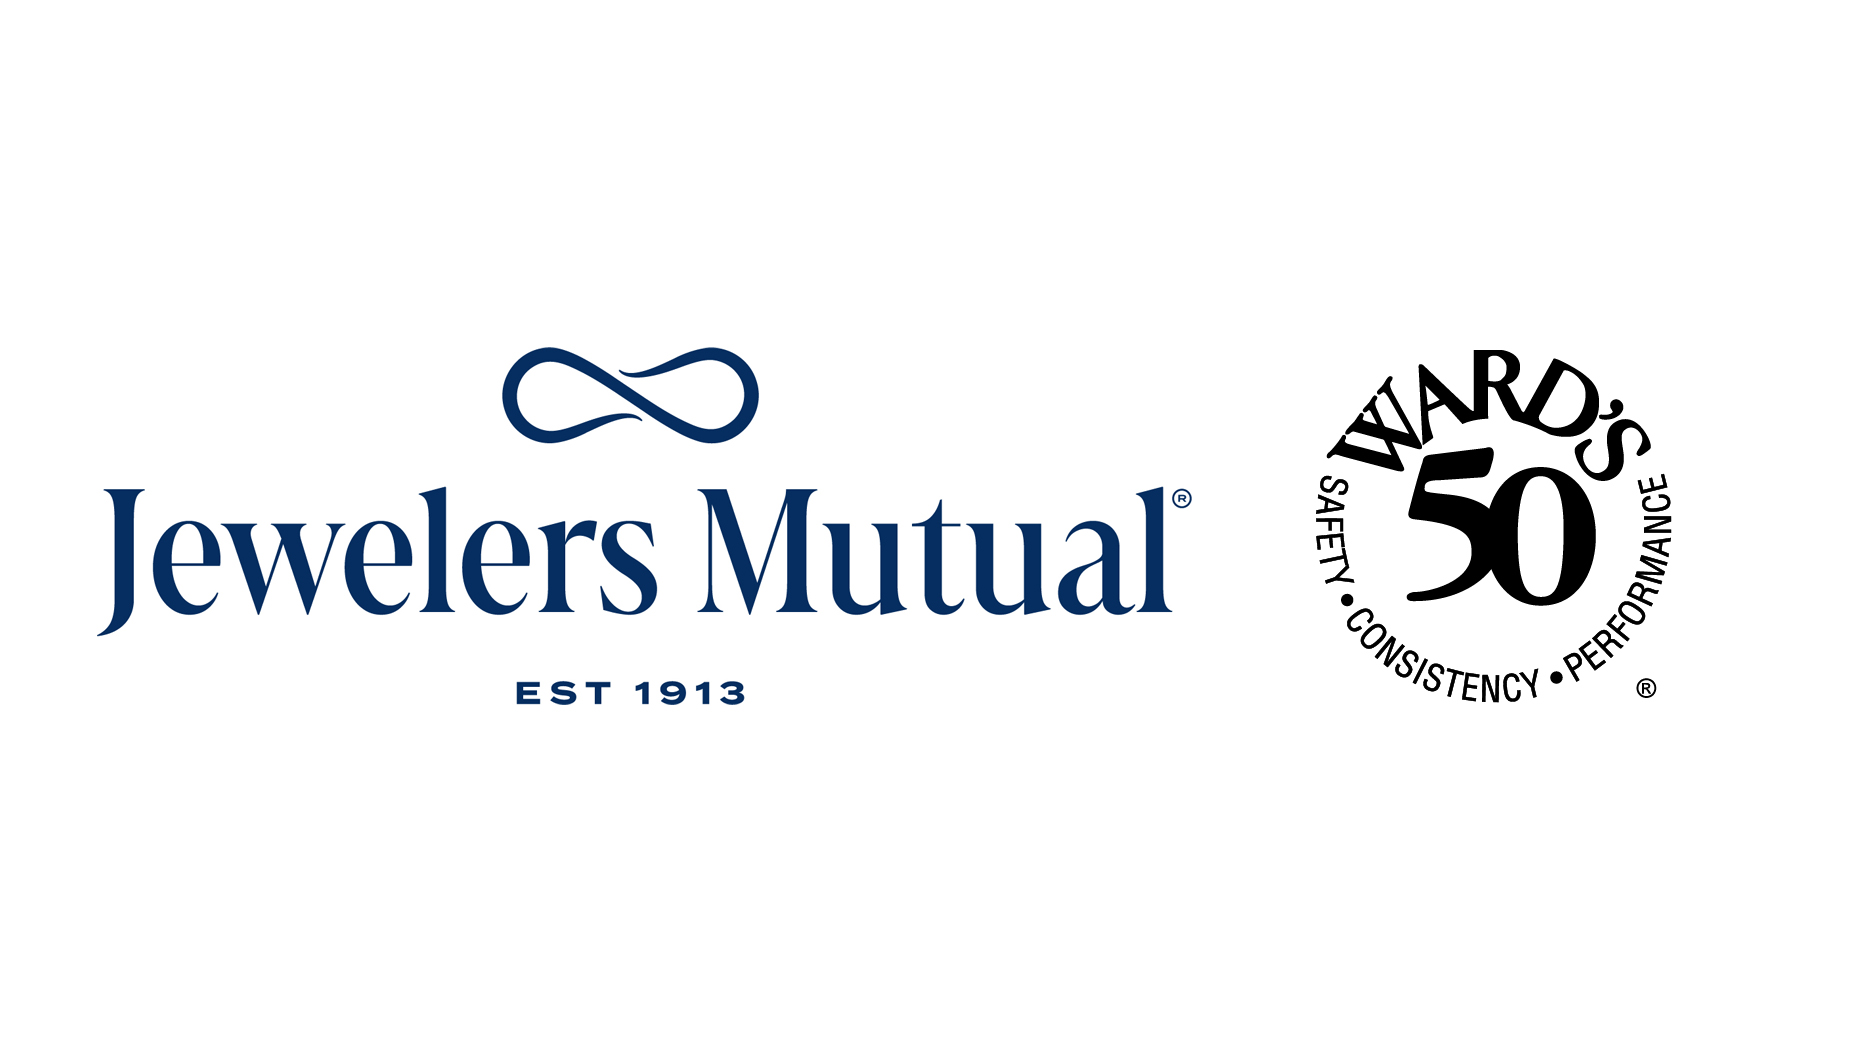 Jewelers Mutual logo and Ward’s 50 List logo 